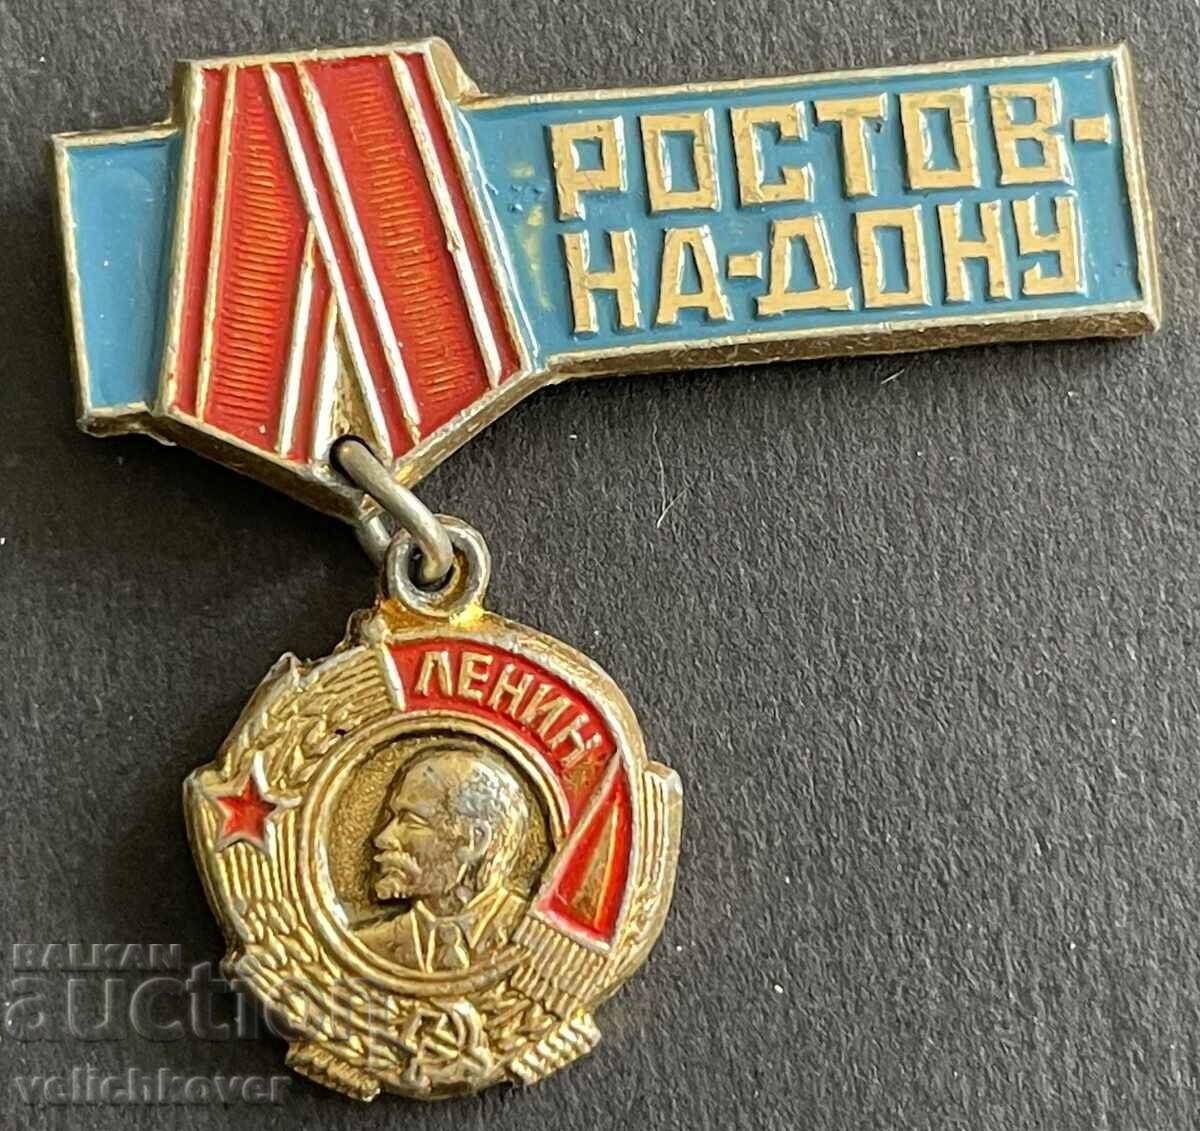 37715 СССР знак Град Ростов на Дон град награден орден Ленин